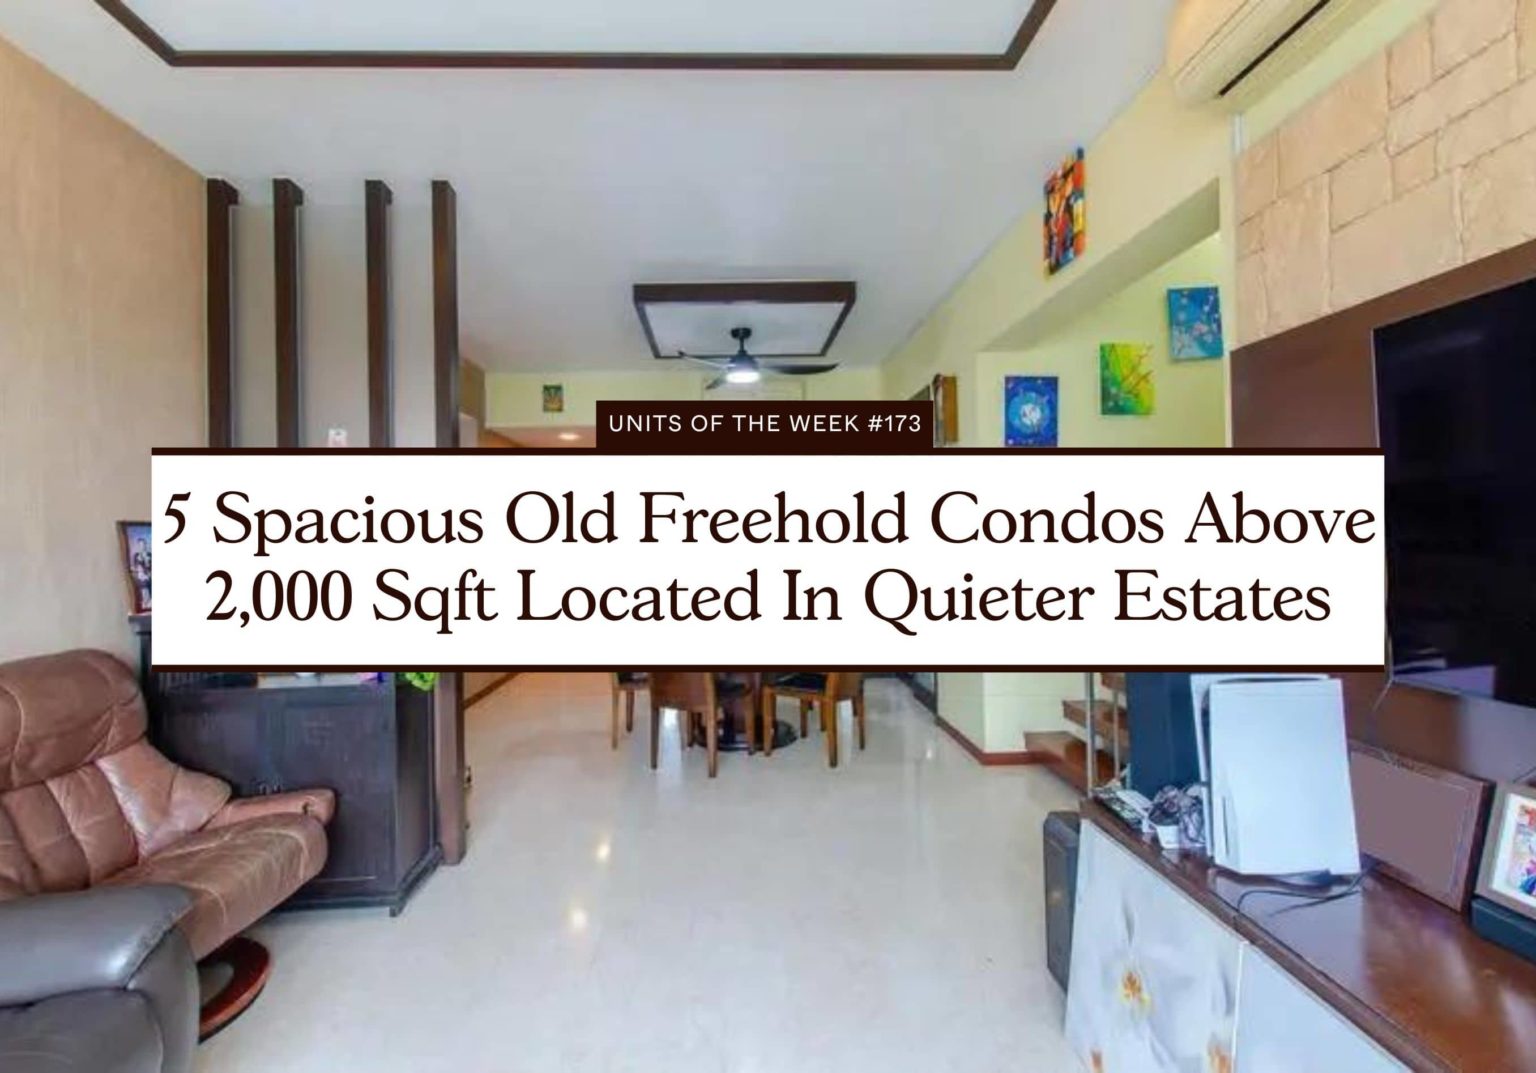 5 Spacious Old Freehold Condos Above 2,000 Sqft Located In Quieter Estates